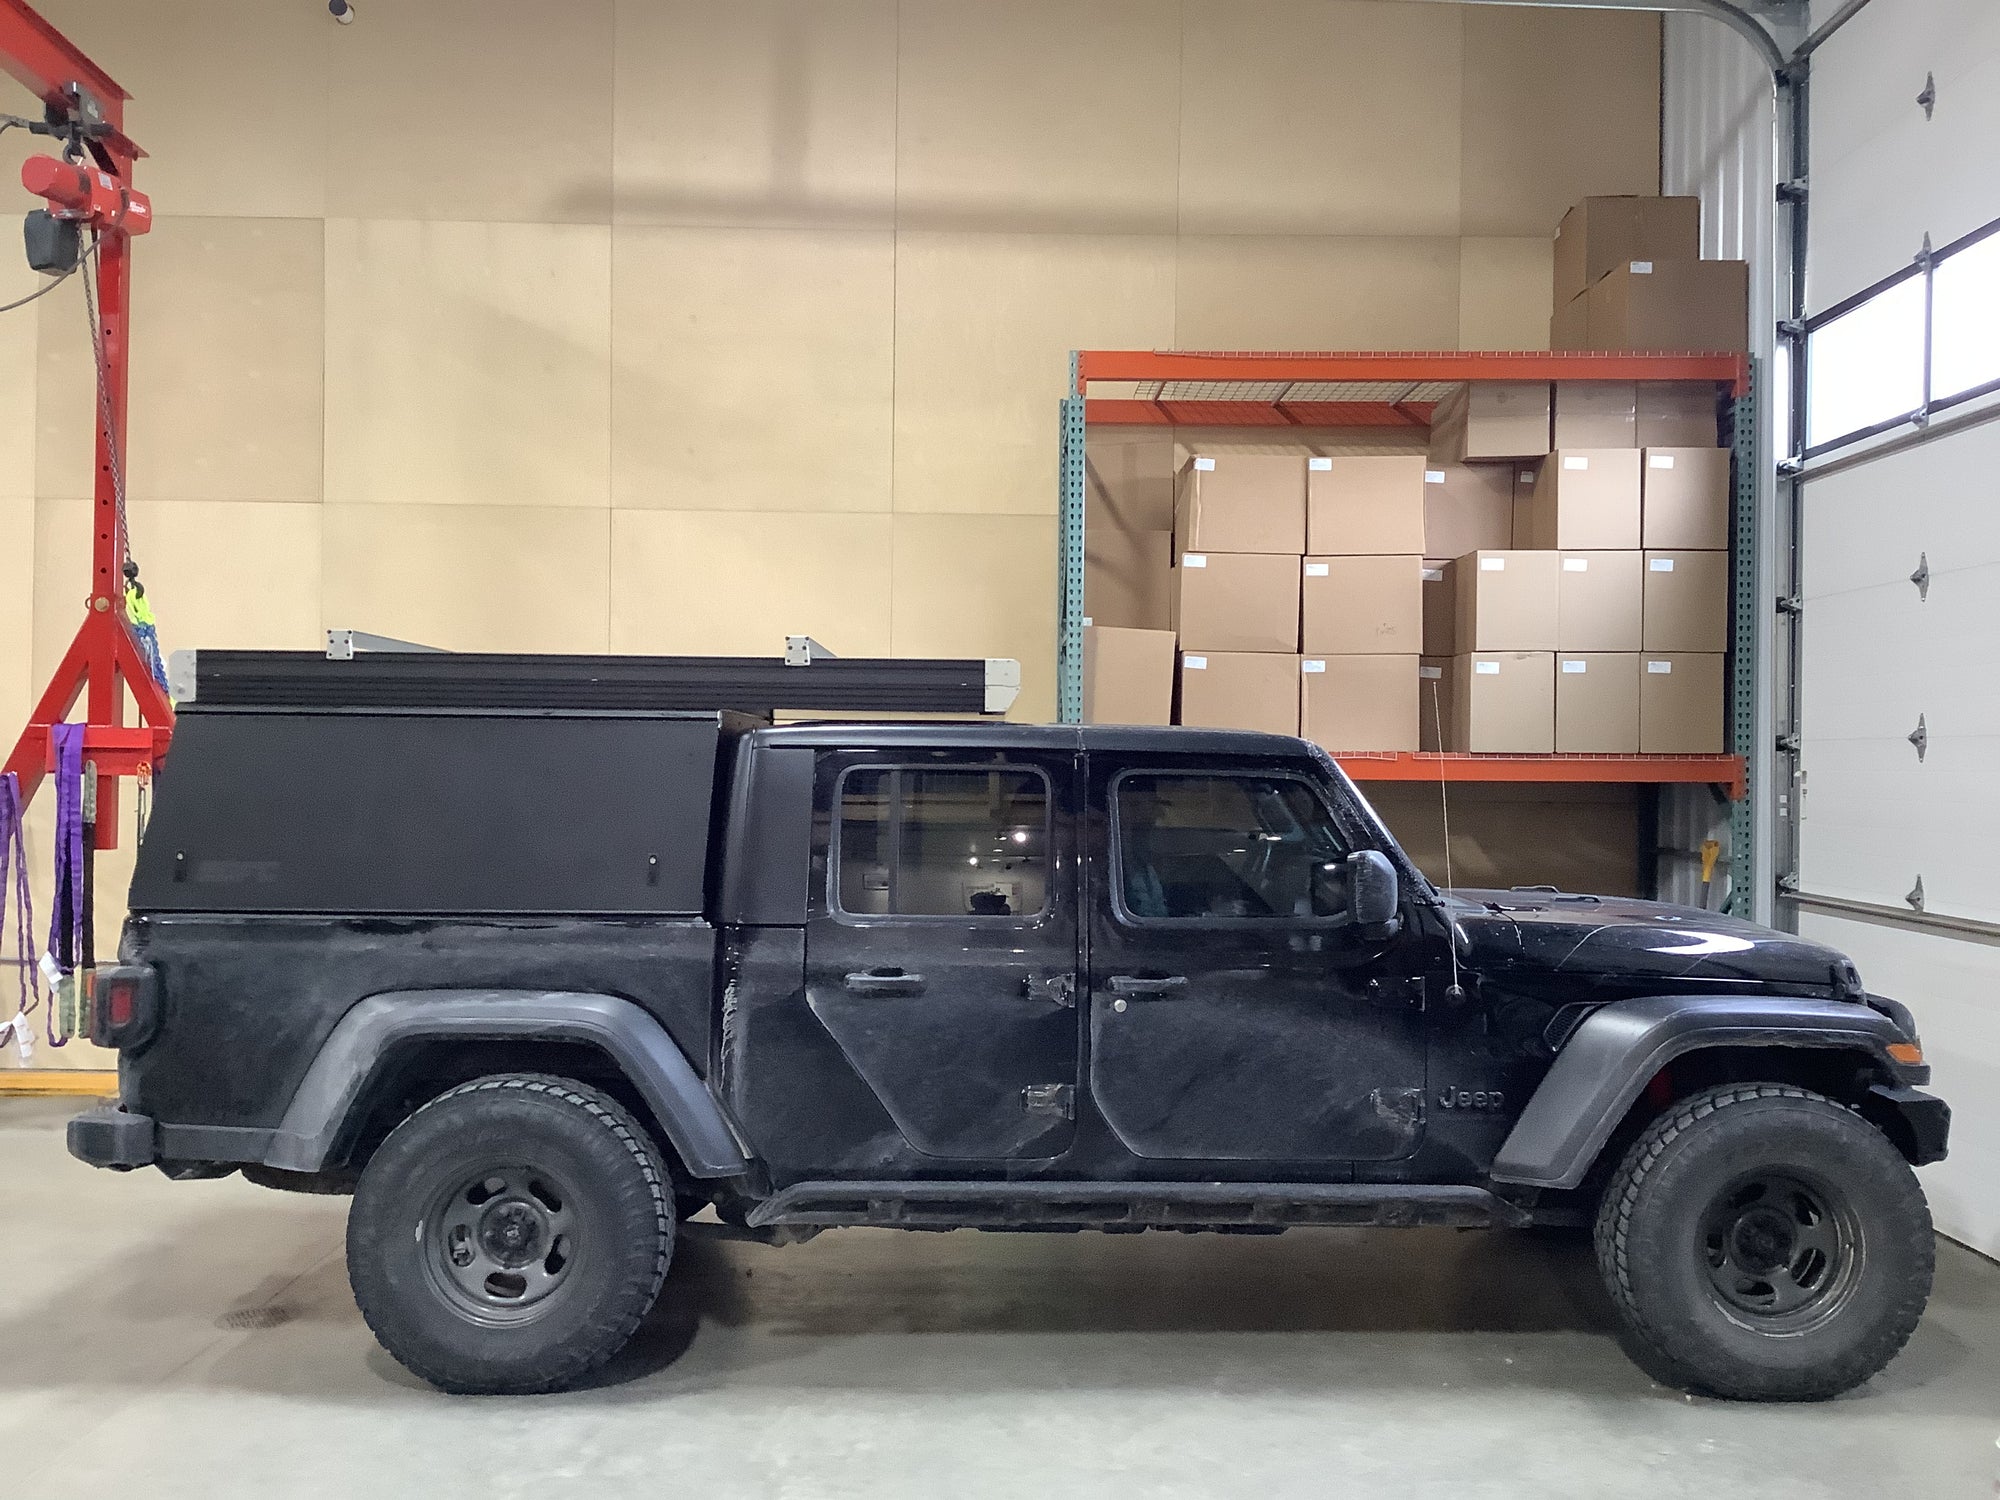 2020 Jeep Gladiator Camper - Build #2400